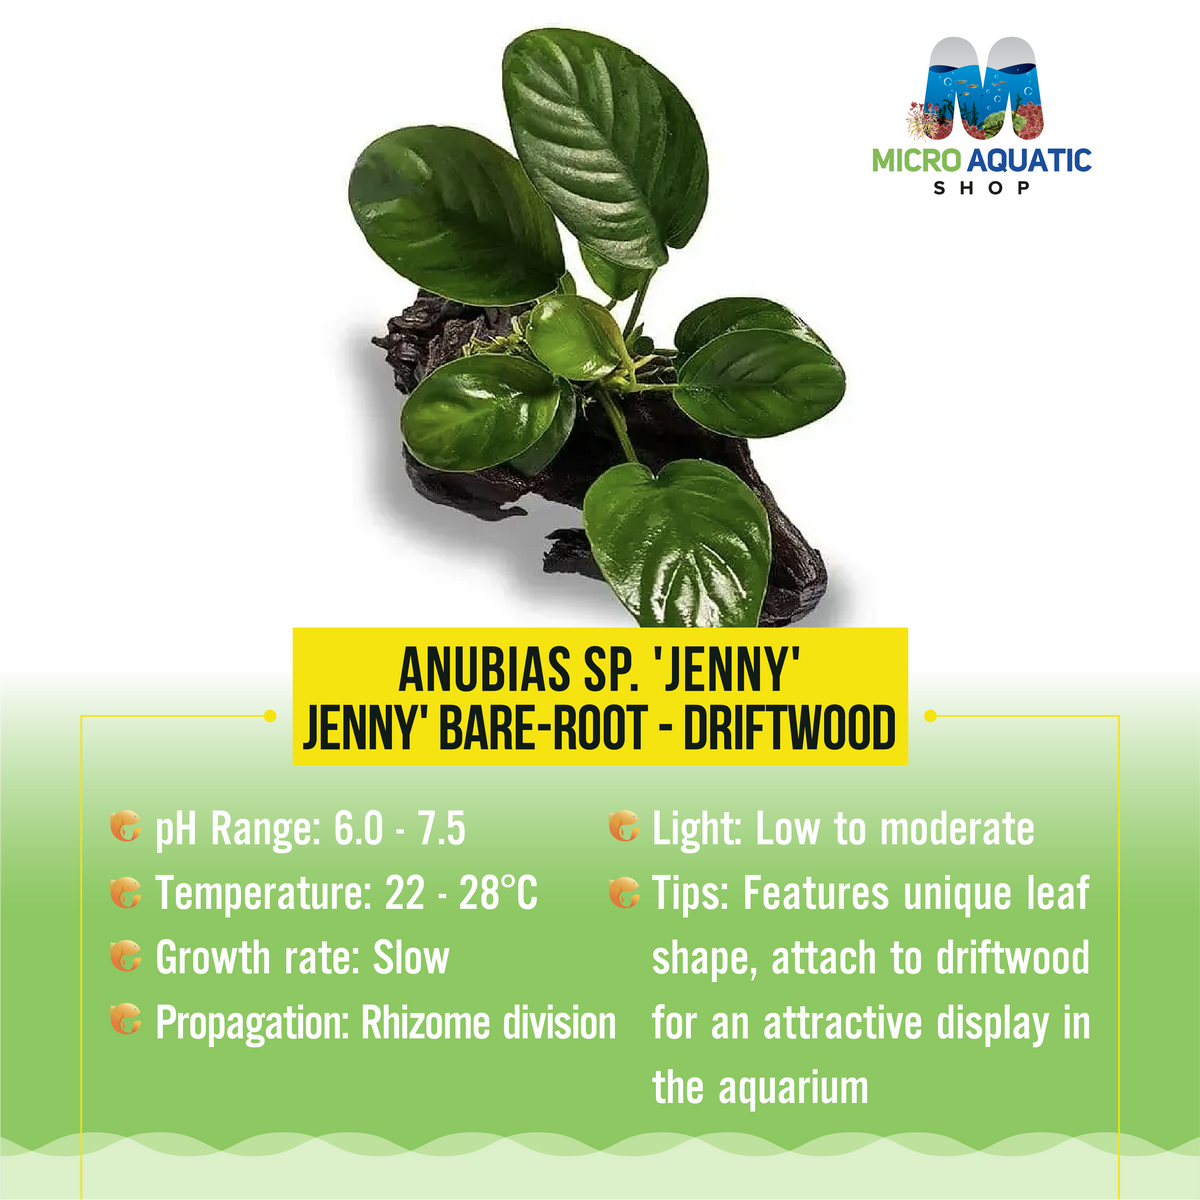 Anubias sp. 'Jenny' - Jenny' Bare-root - Driftwood